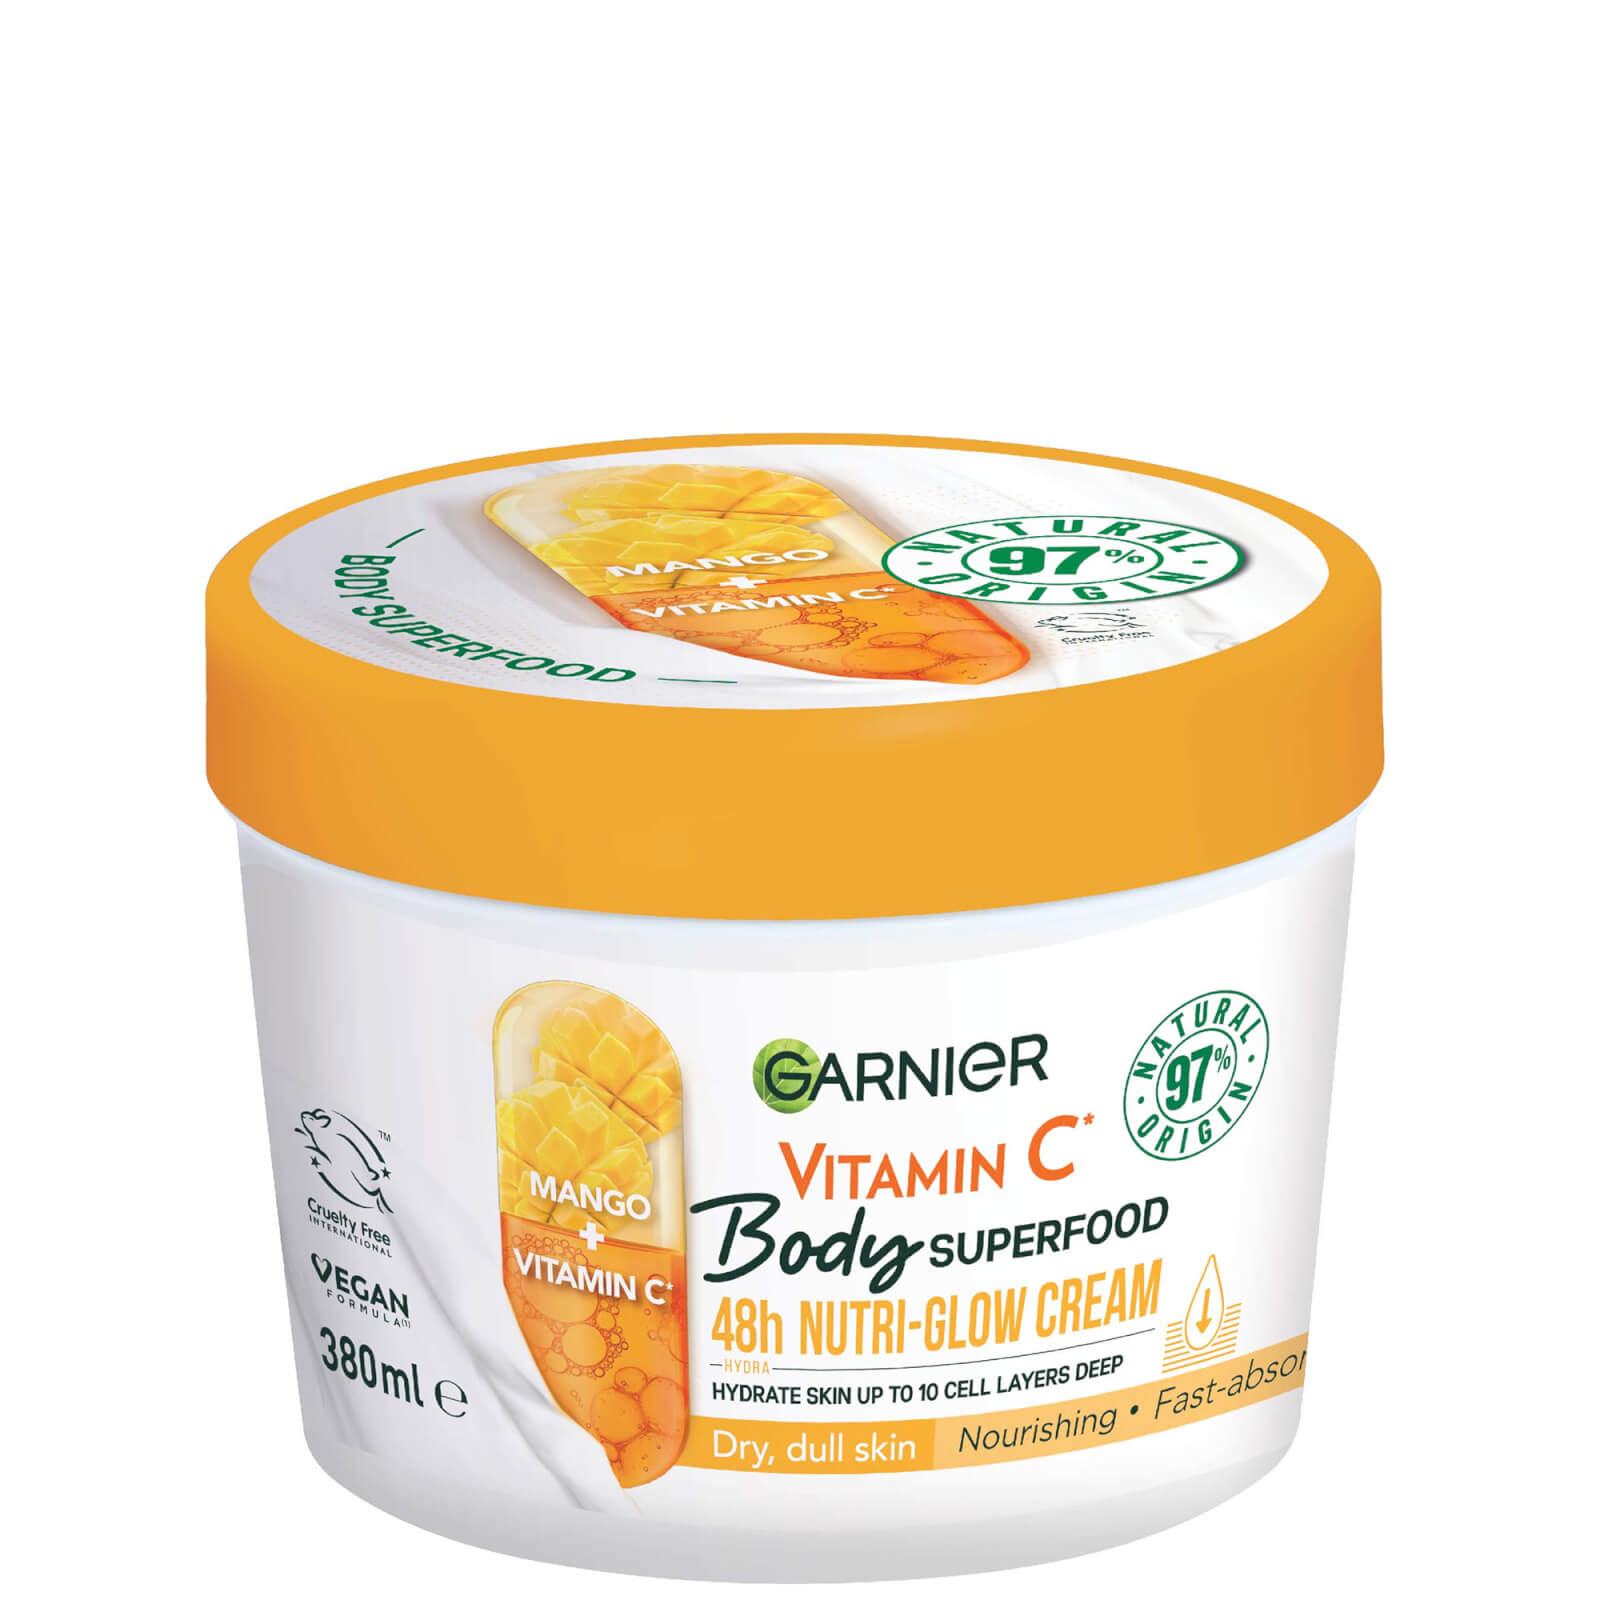 Image of Garnier Body Superfood Nutri Glow Body Cream Vitamin C and Mango 380ml